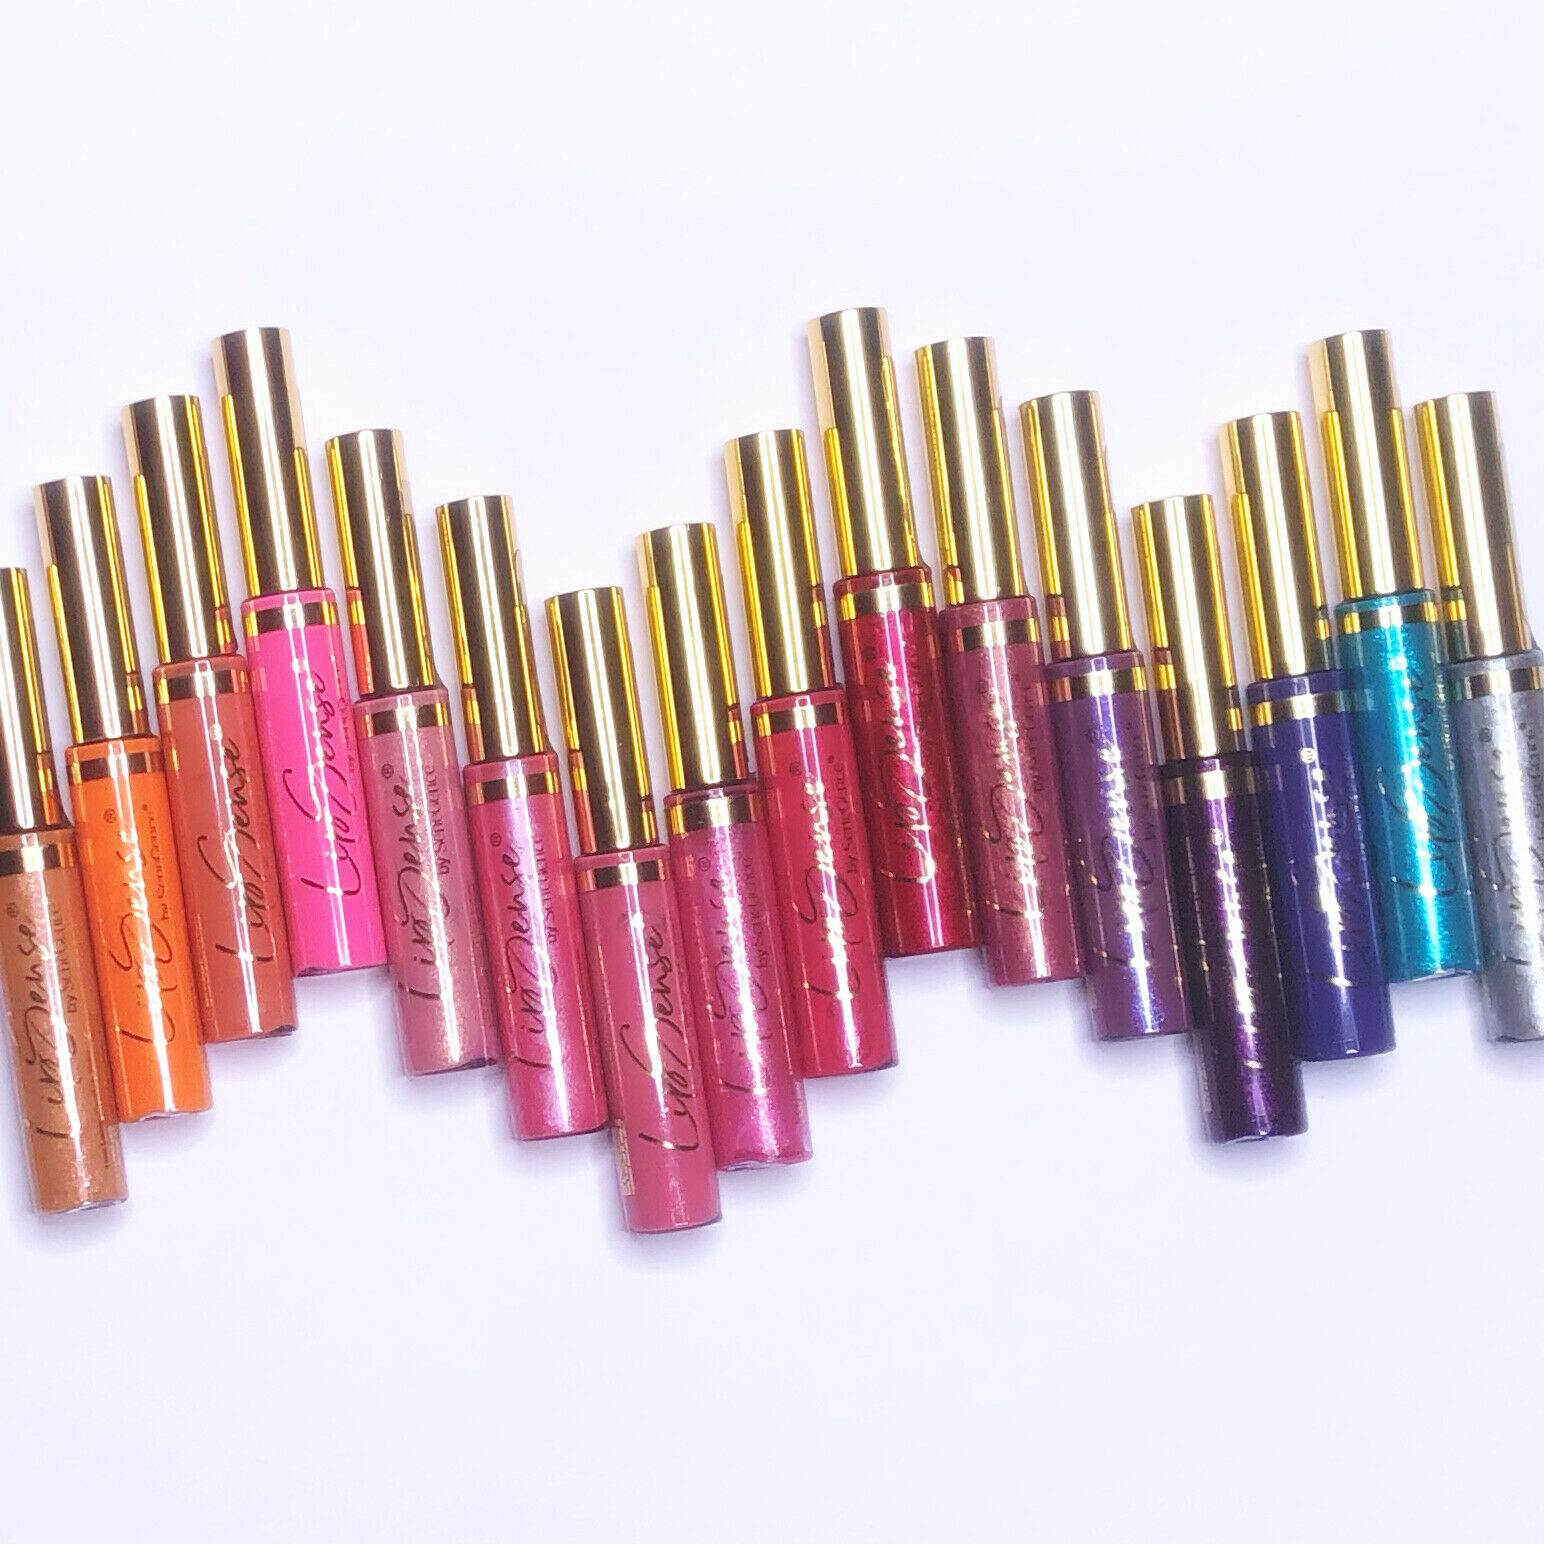 Lipsense Senegence New Full Size Authentic Lip Colors & Gloss Sale Free Shipping